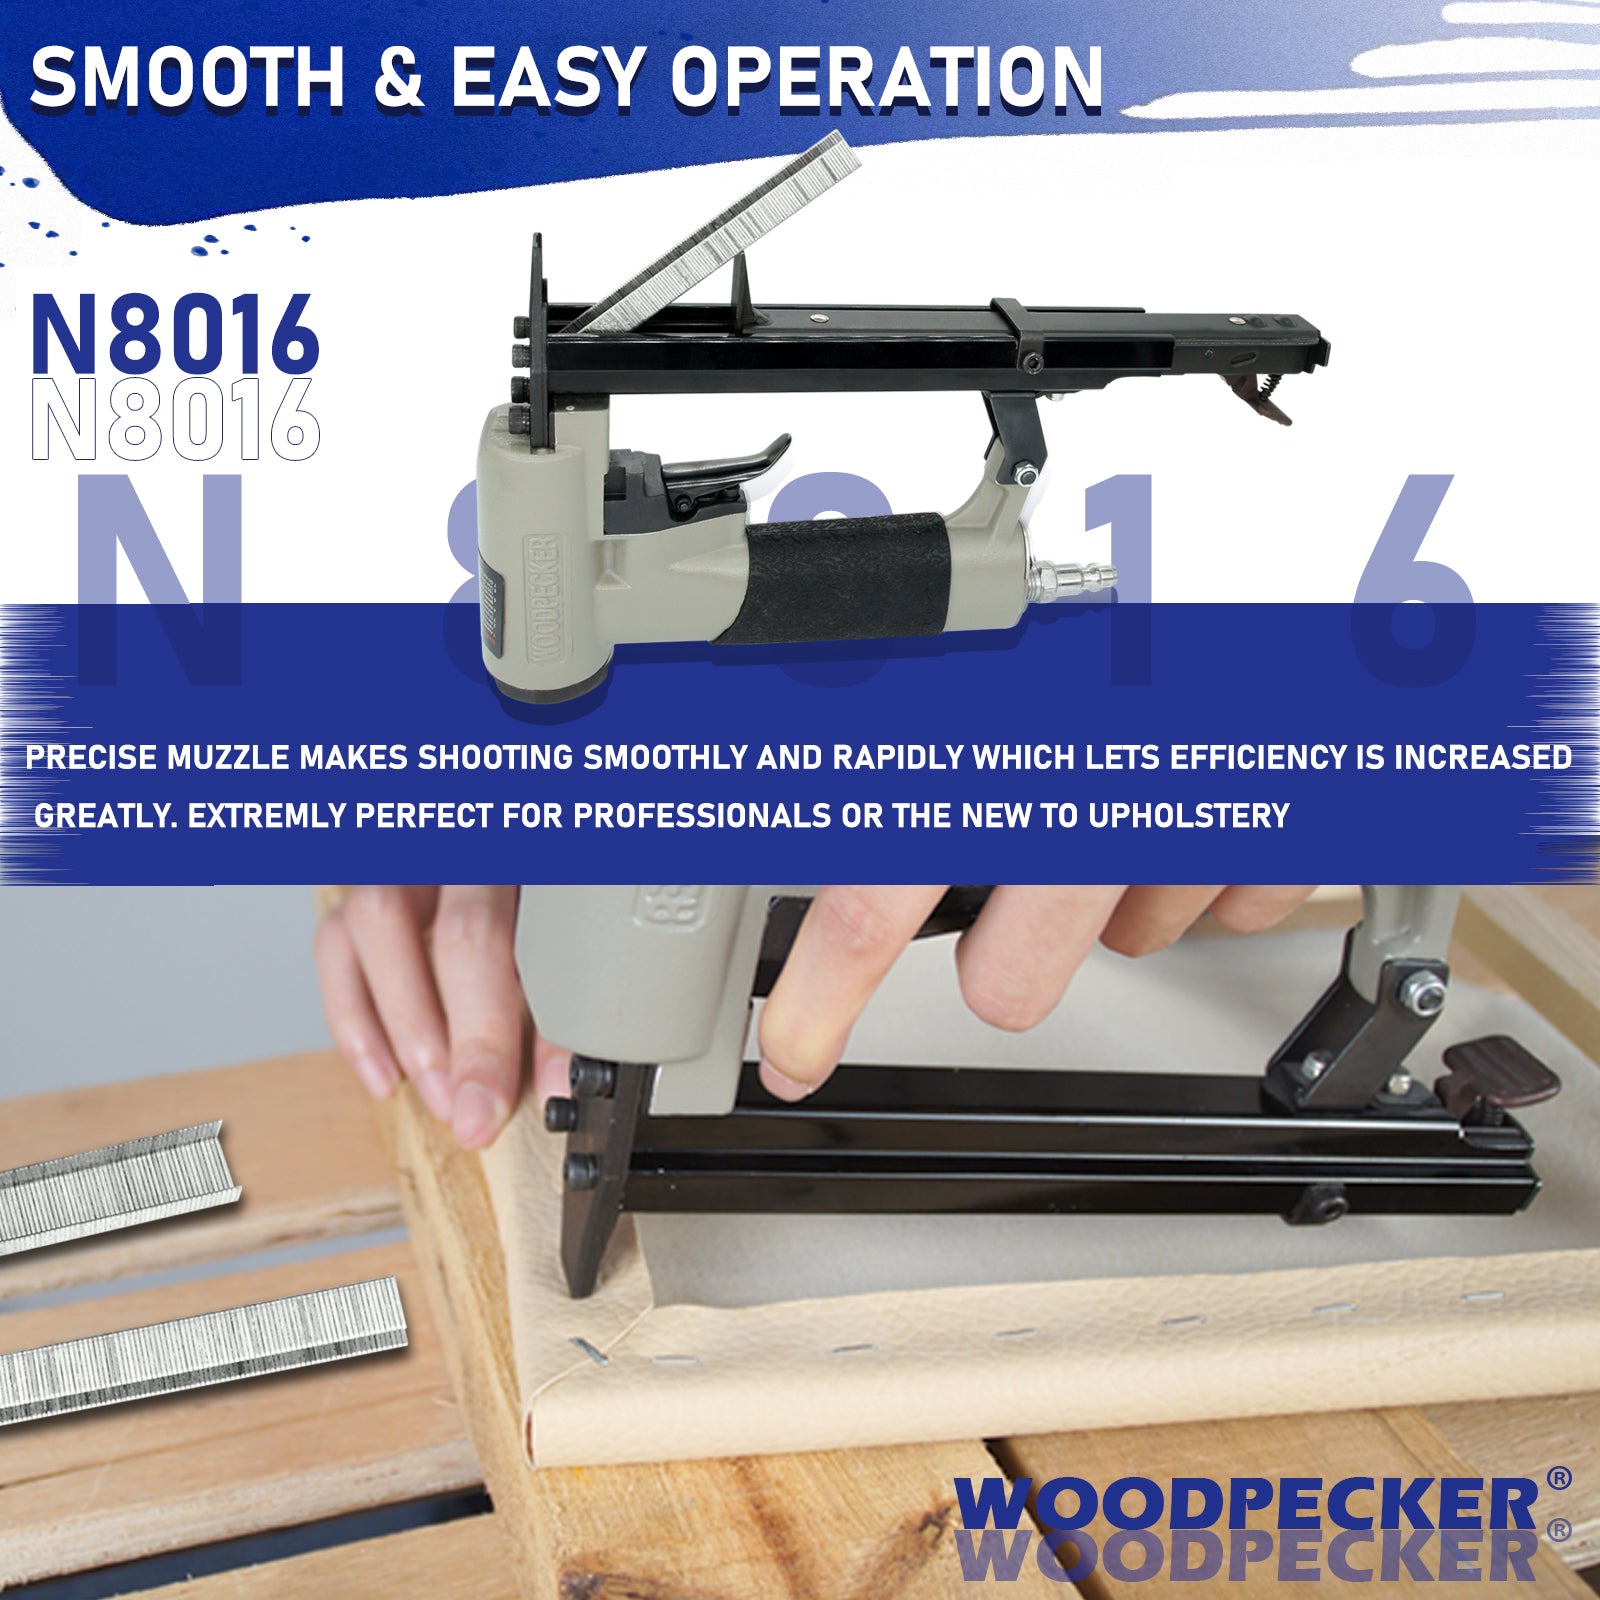 Woodpecker - N8016 Pneumatic Upholstery Stapler, 21 Gauge, Full Metal, 1/2